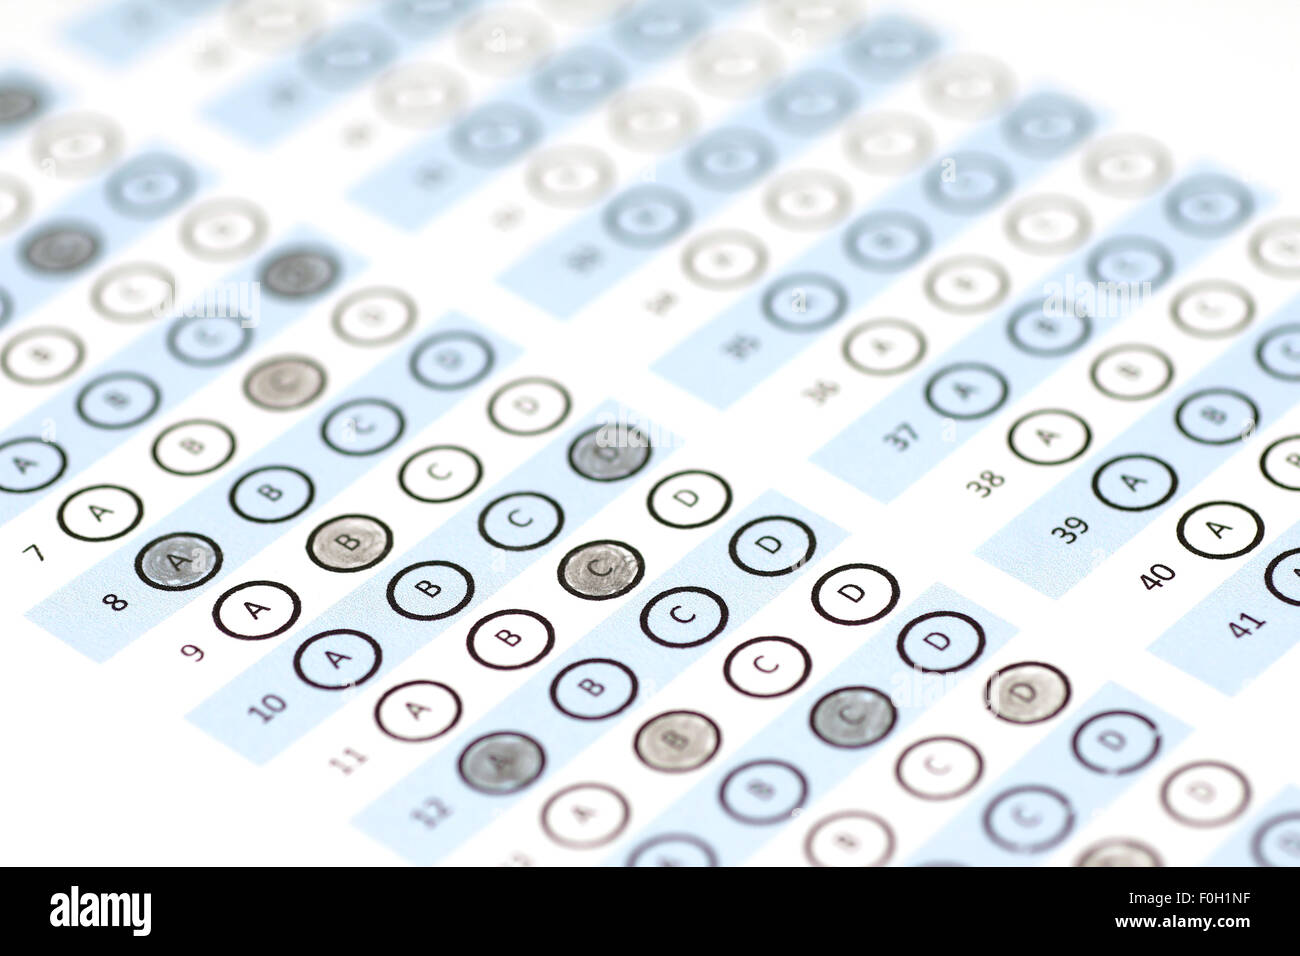 answer sheet or test score Stock Photo